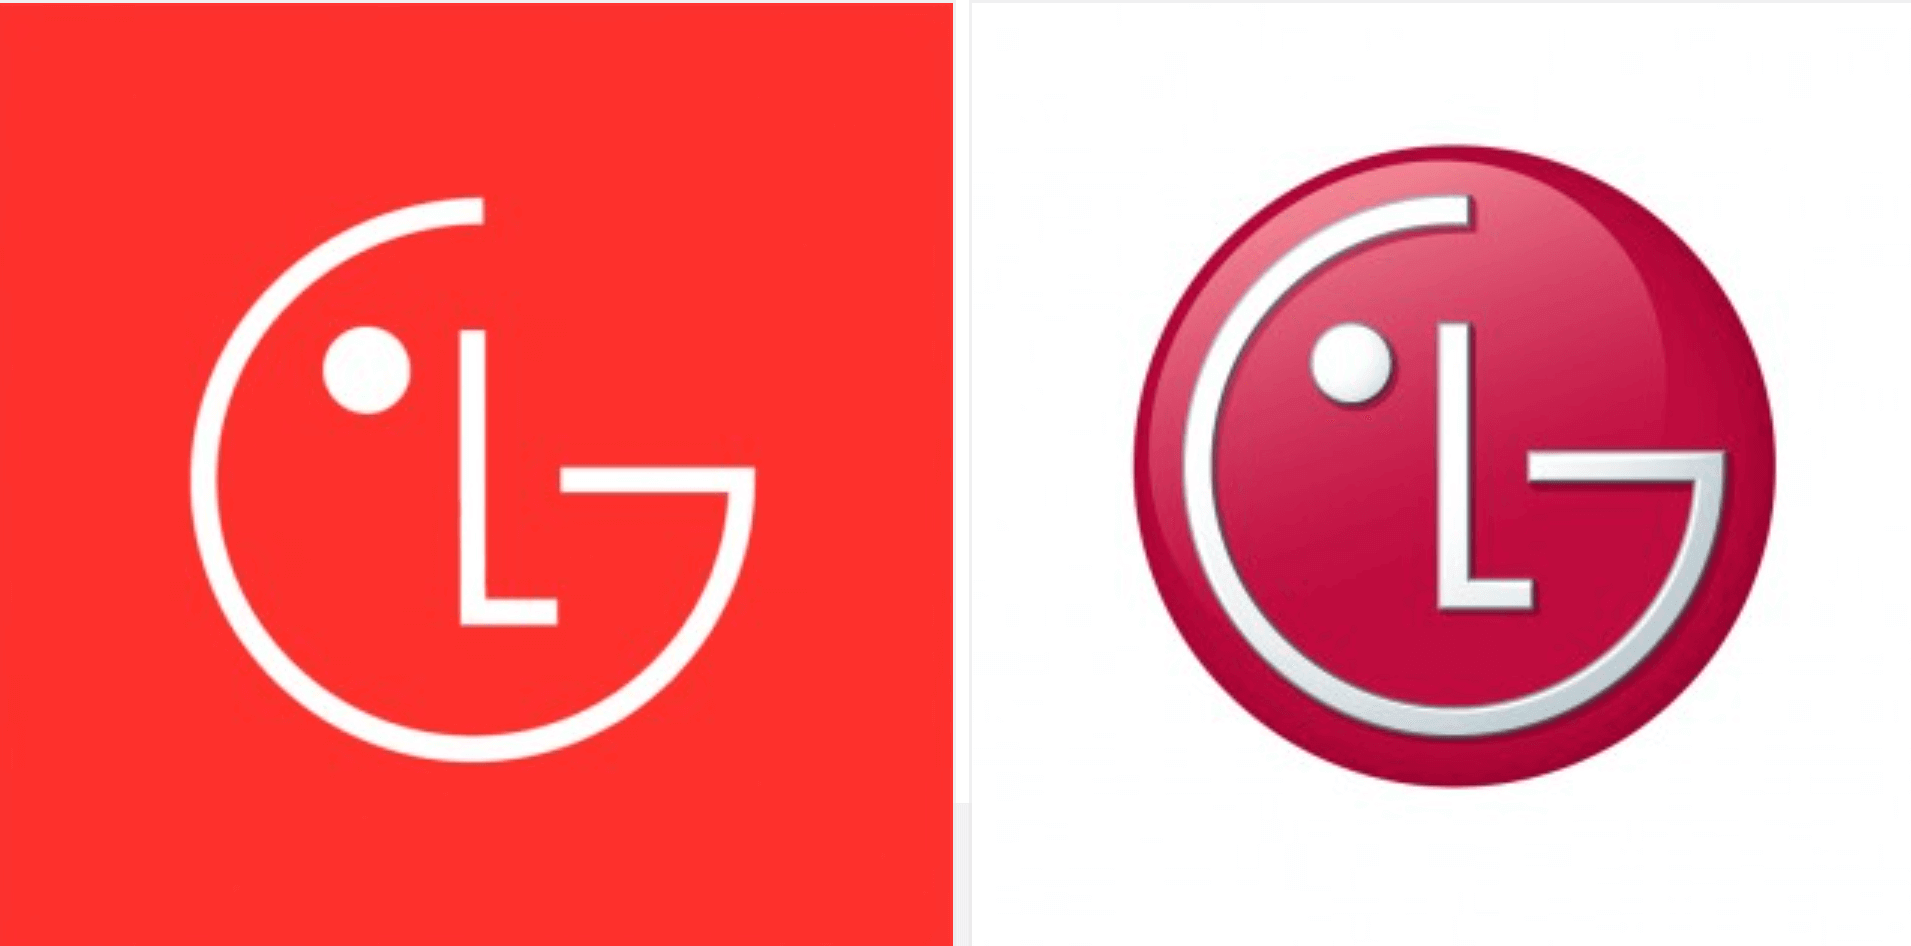 LG Goes Modern With New Brand Identity | DesignRush